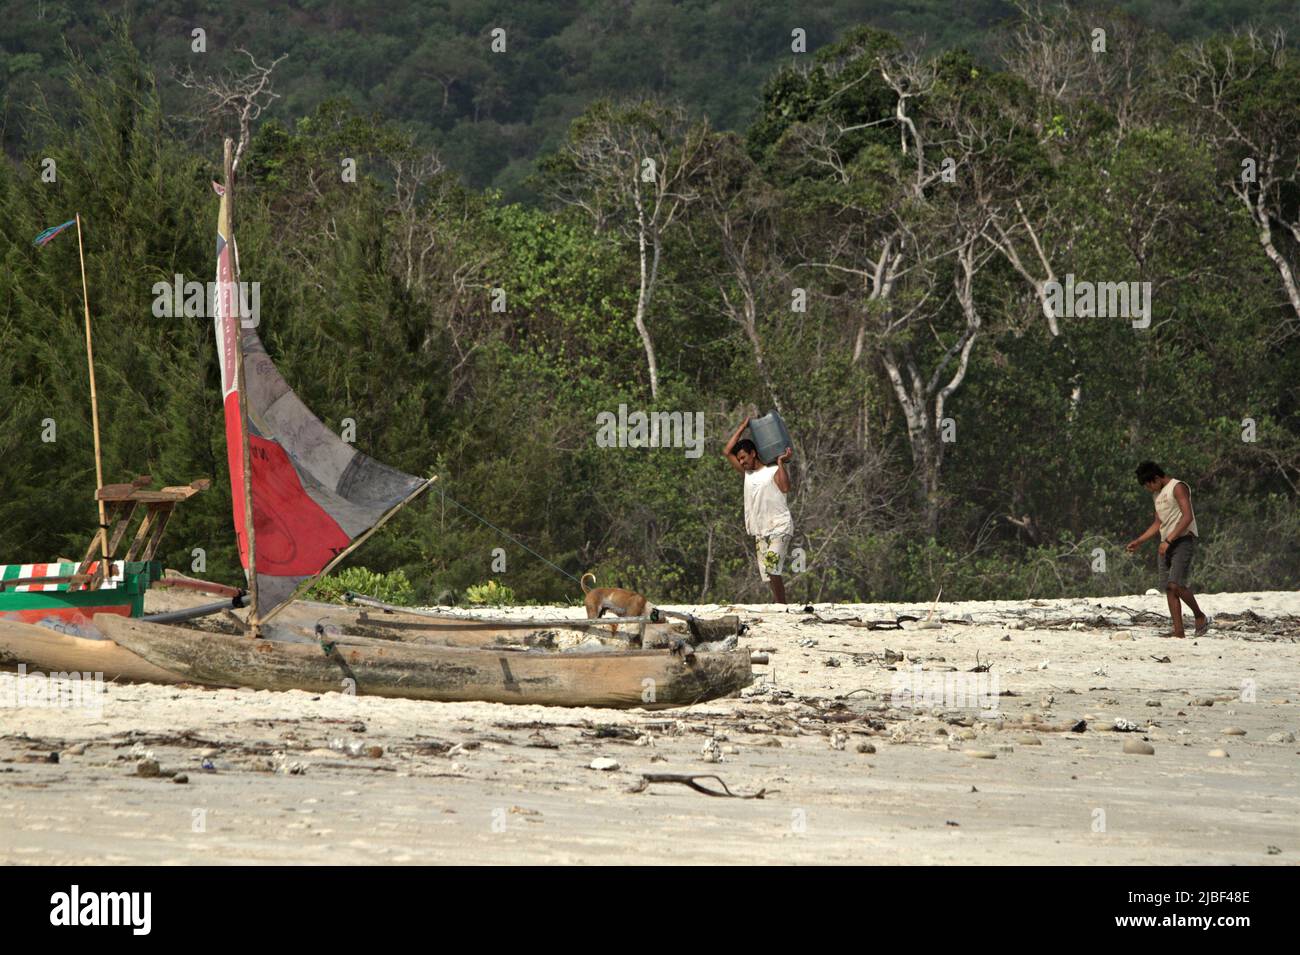 A fisherman carrying a jerry can as he is walking toward wooden canoes on Tarimbang beach in Tabundung, East Sumba, East Nusa Tenggara, Indonesia. Stock Photo